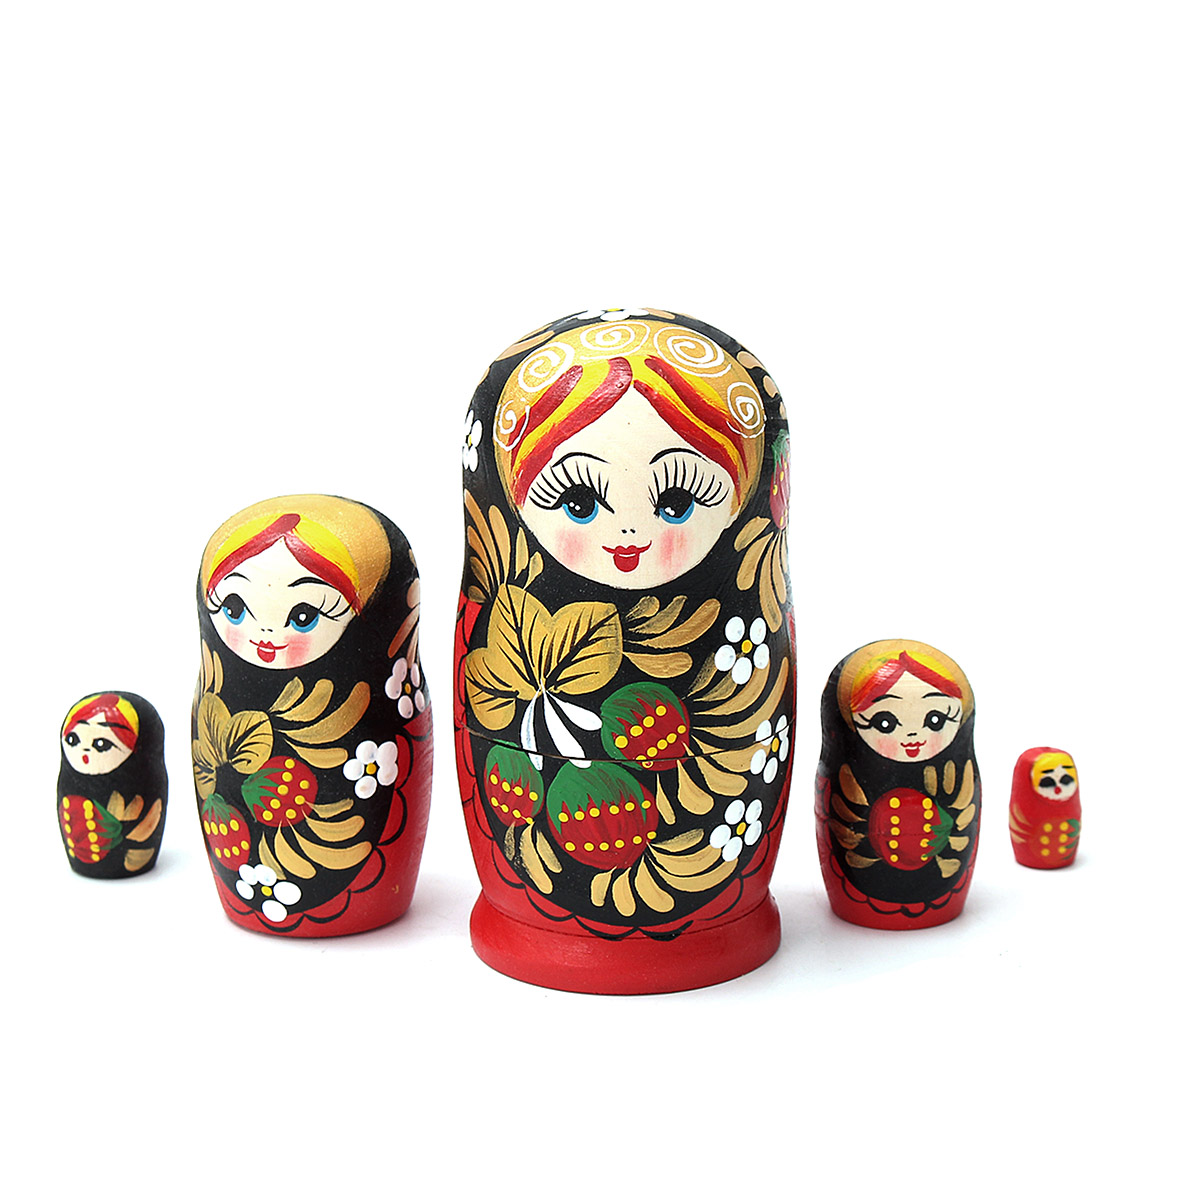 5PCSSet-Wooden-Doll-Matryoshka-Nesting-Russian-Babushka-Toy-Gift-Decor-Collection-1182666-2